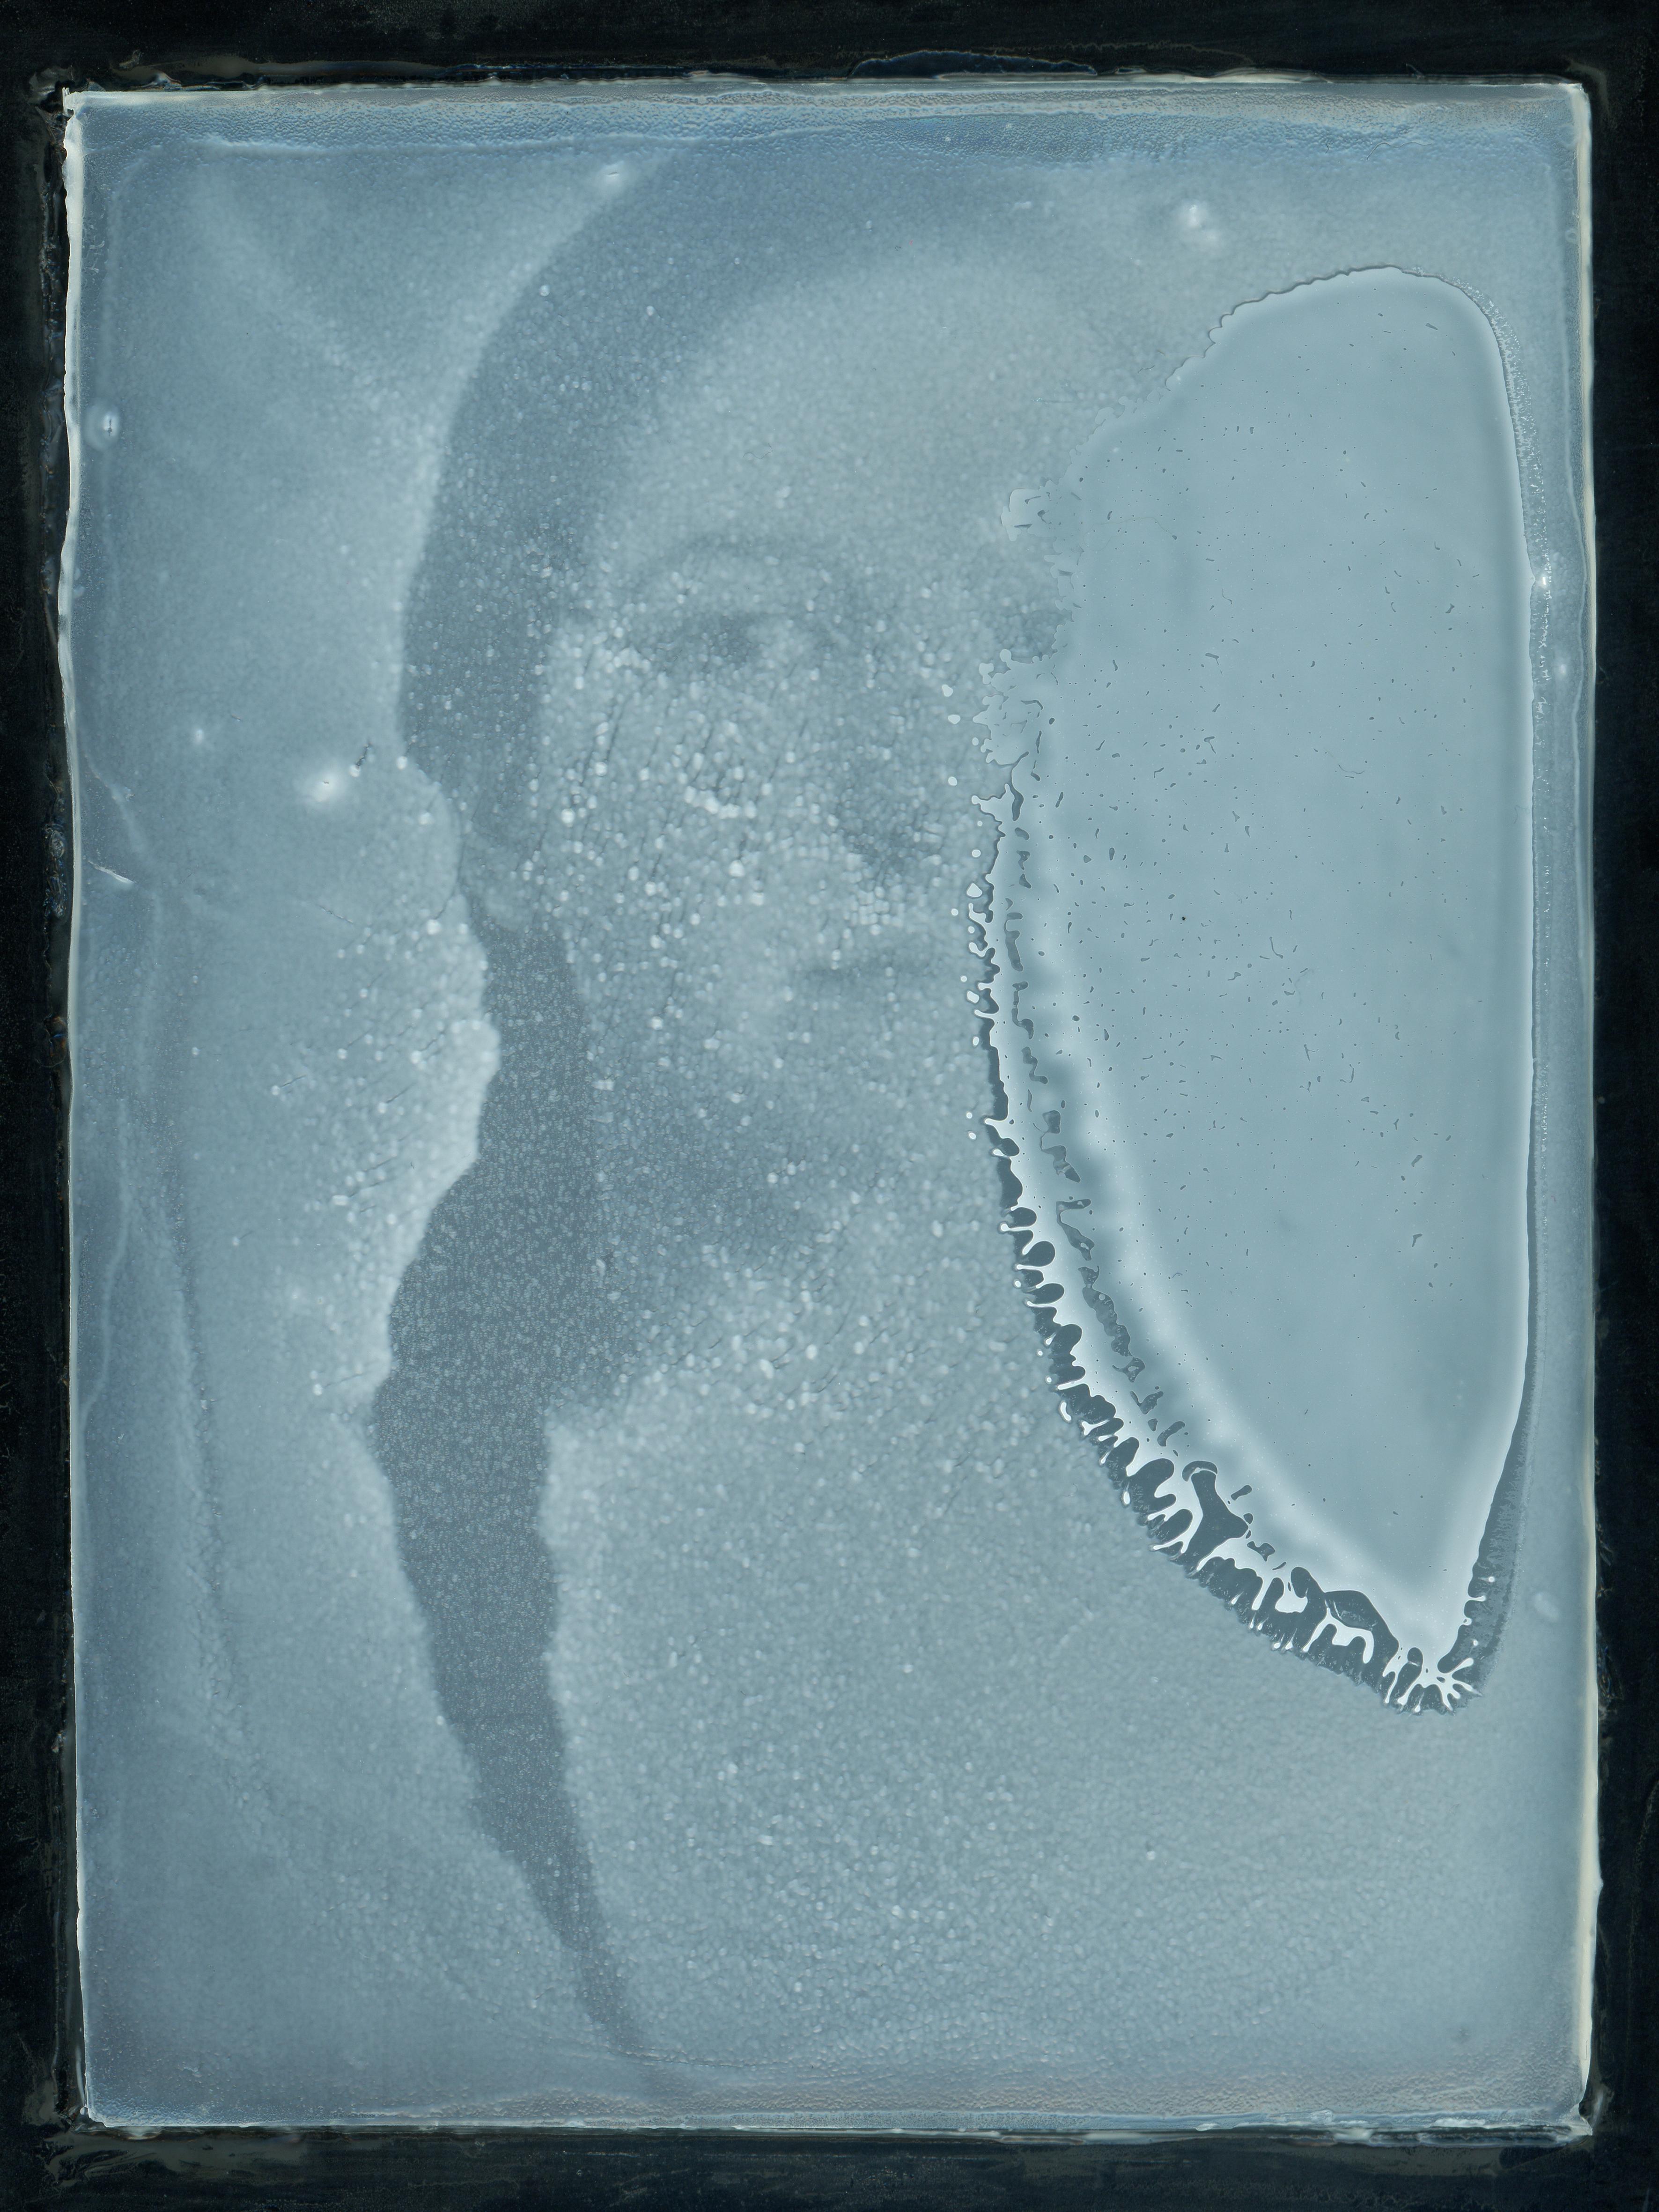 Yeasted Teresa - Contemporary, Conceptual, Polaroid, 21st Century, Portrait